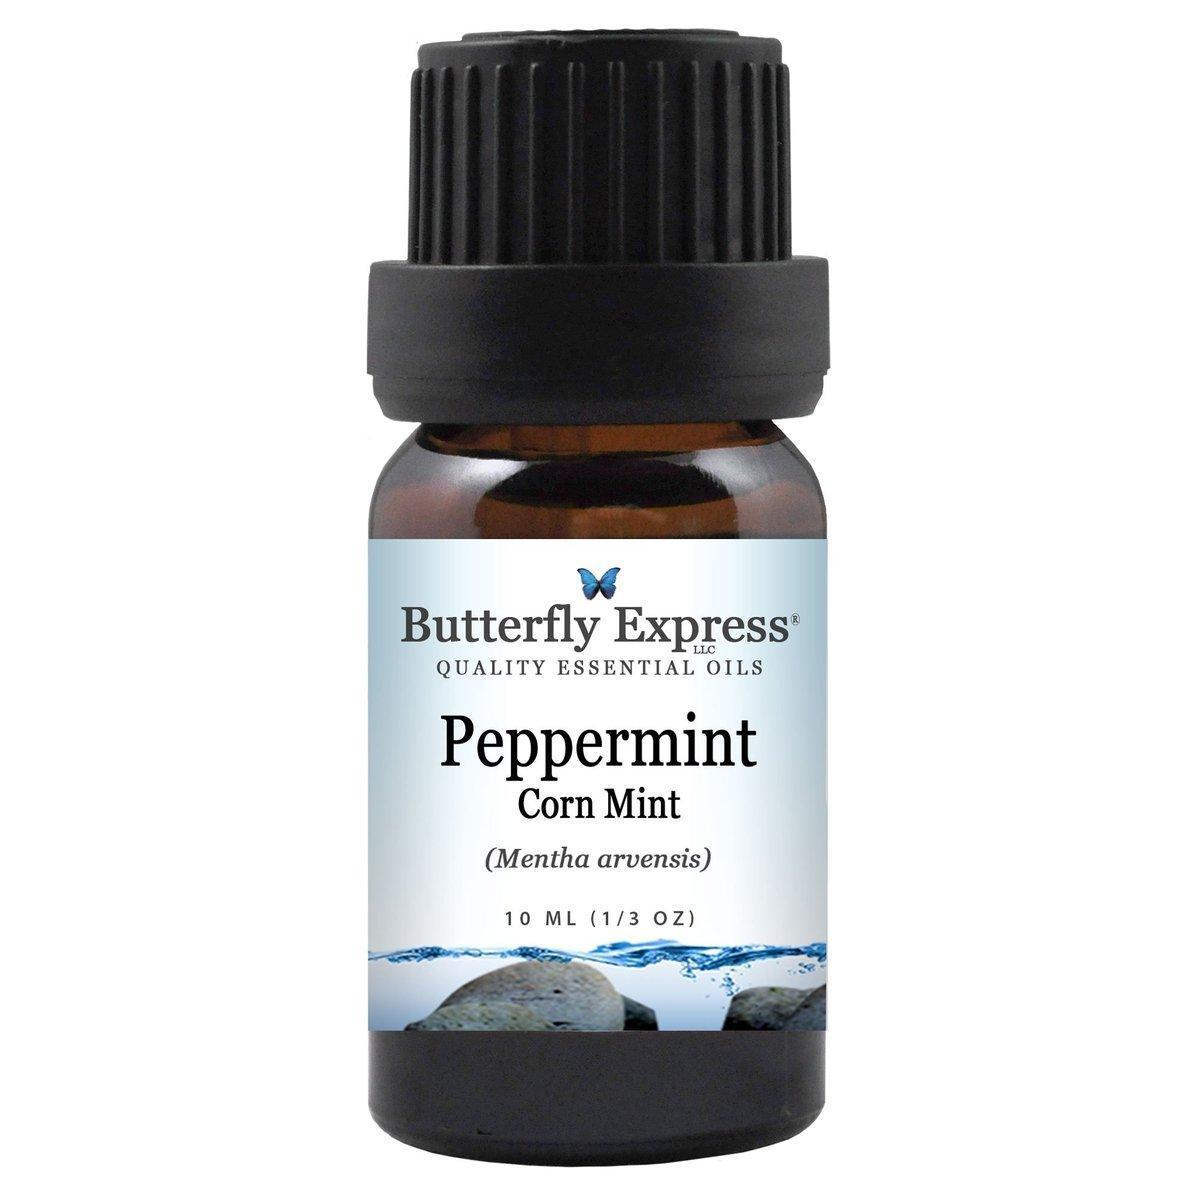 Peppermint Corn Mint essential oils